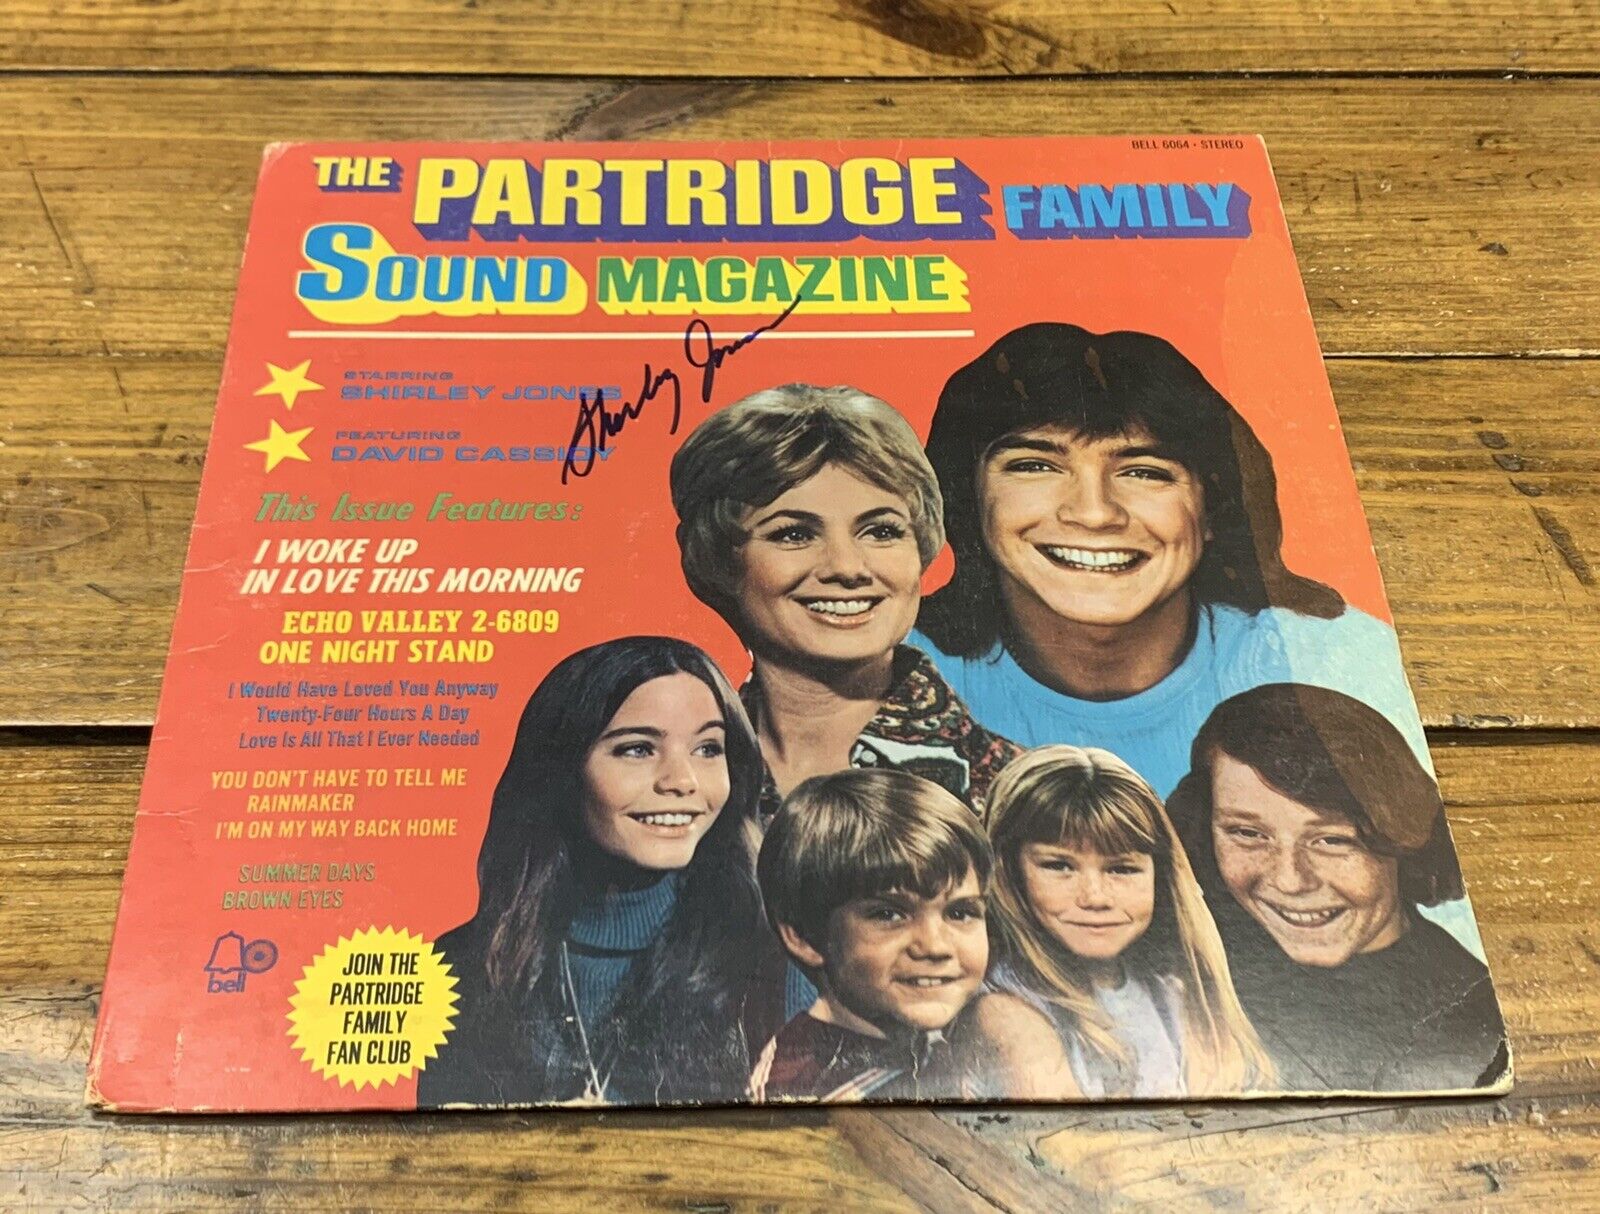 SHIRLEY JONES SIGNED PARTRIDGE FAMILY LP VINYL RECORD ALBUM GOOD COND.